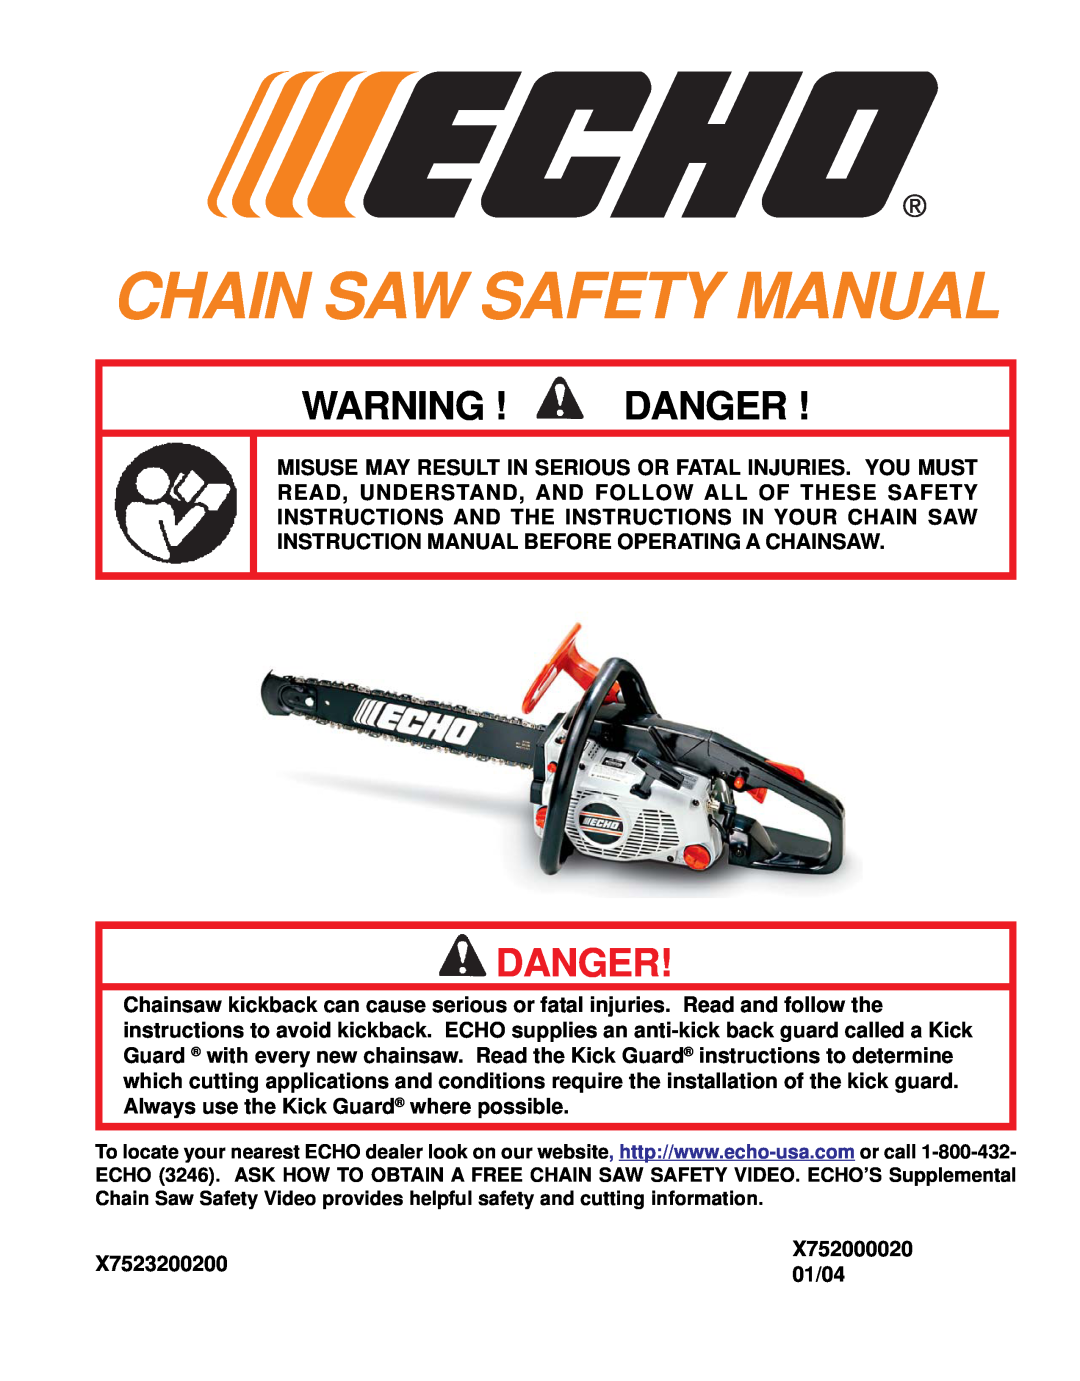 Echo X52000020 instruction manual Chain Saw Safety Manual, Warning ! Danger 